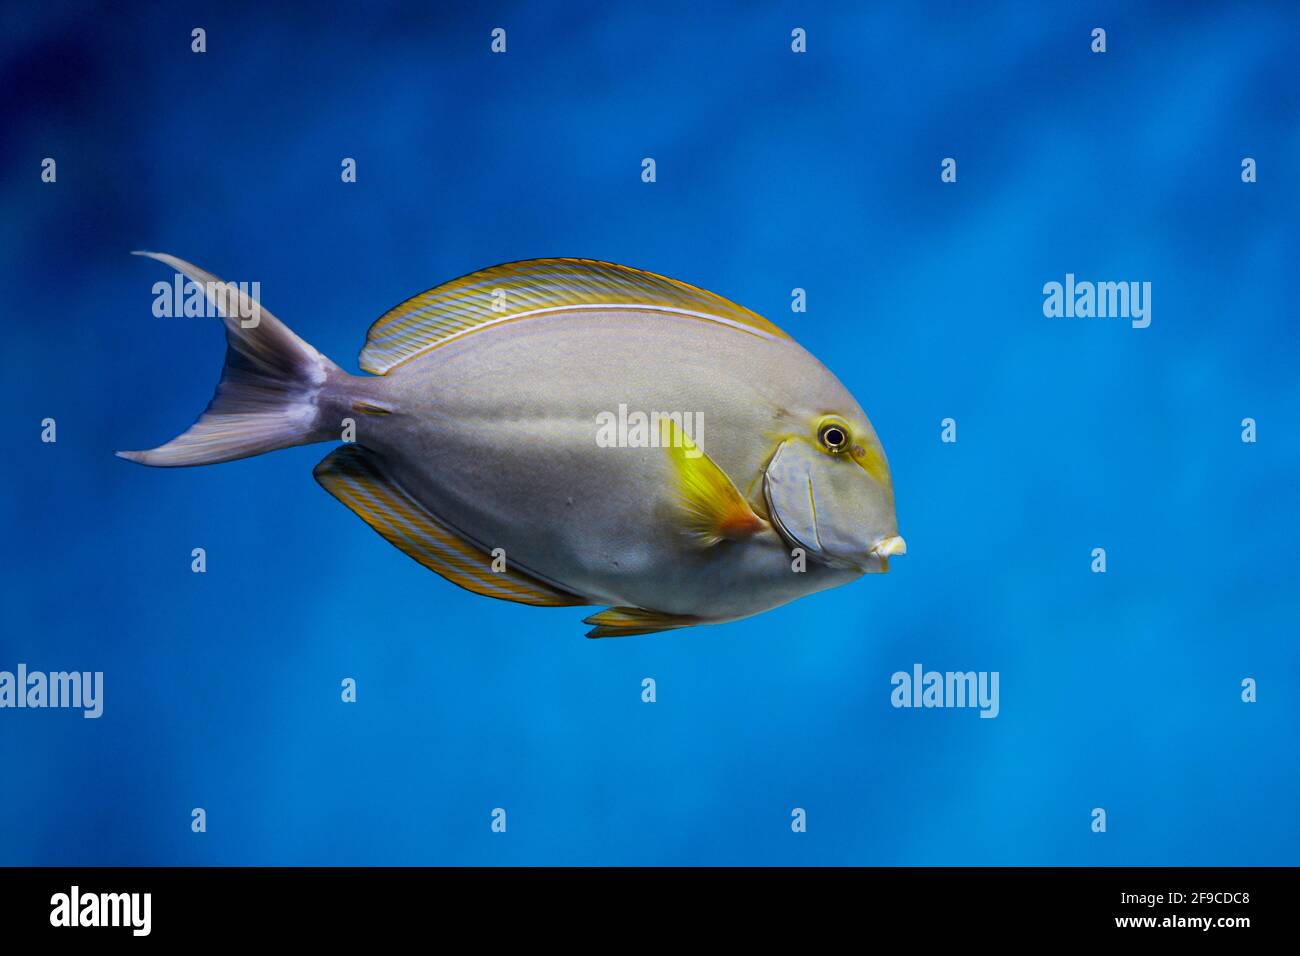 Yellowfin surgeonfish, or Cuvier's surgeonfish (Acanthurus xanthopterus) swims in aquarium. Stock Photo